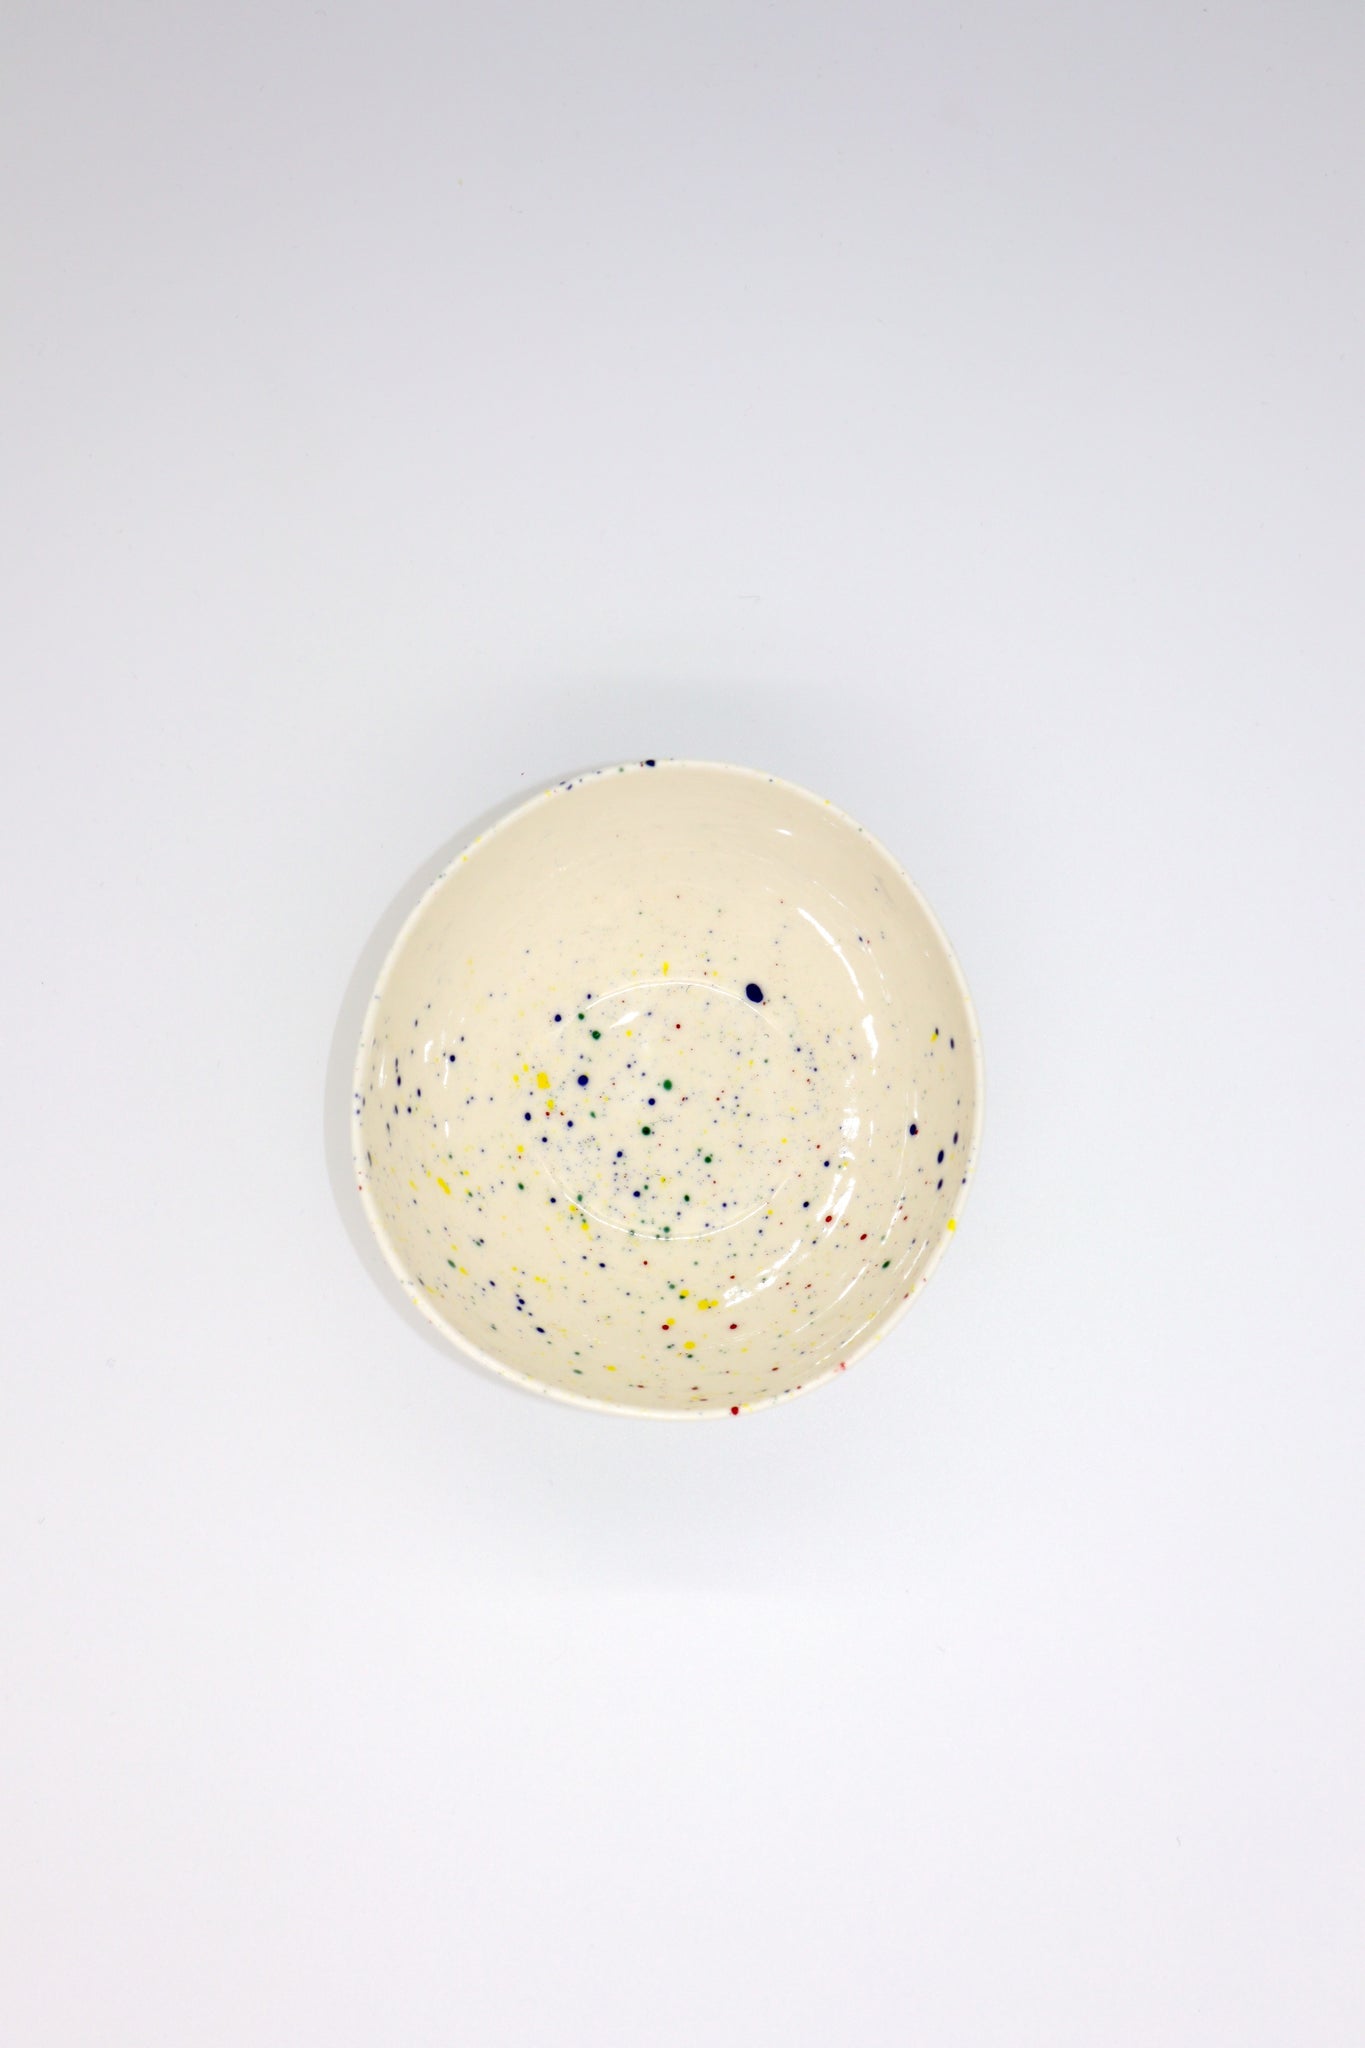 Planet Bowl by Frizbee Ceramics